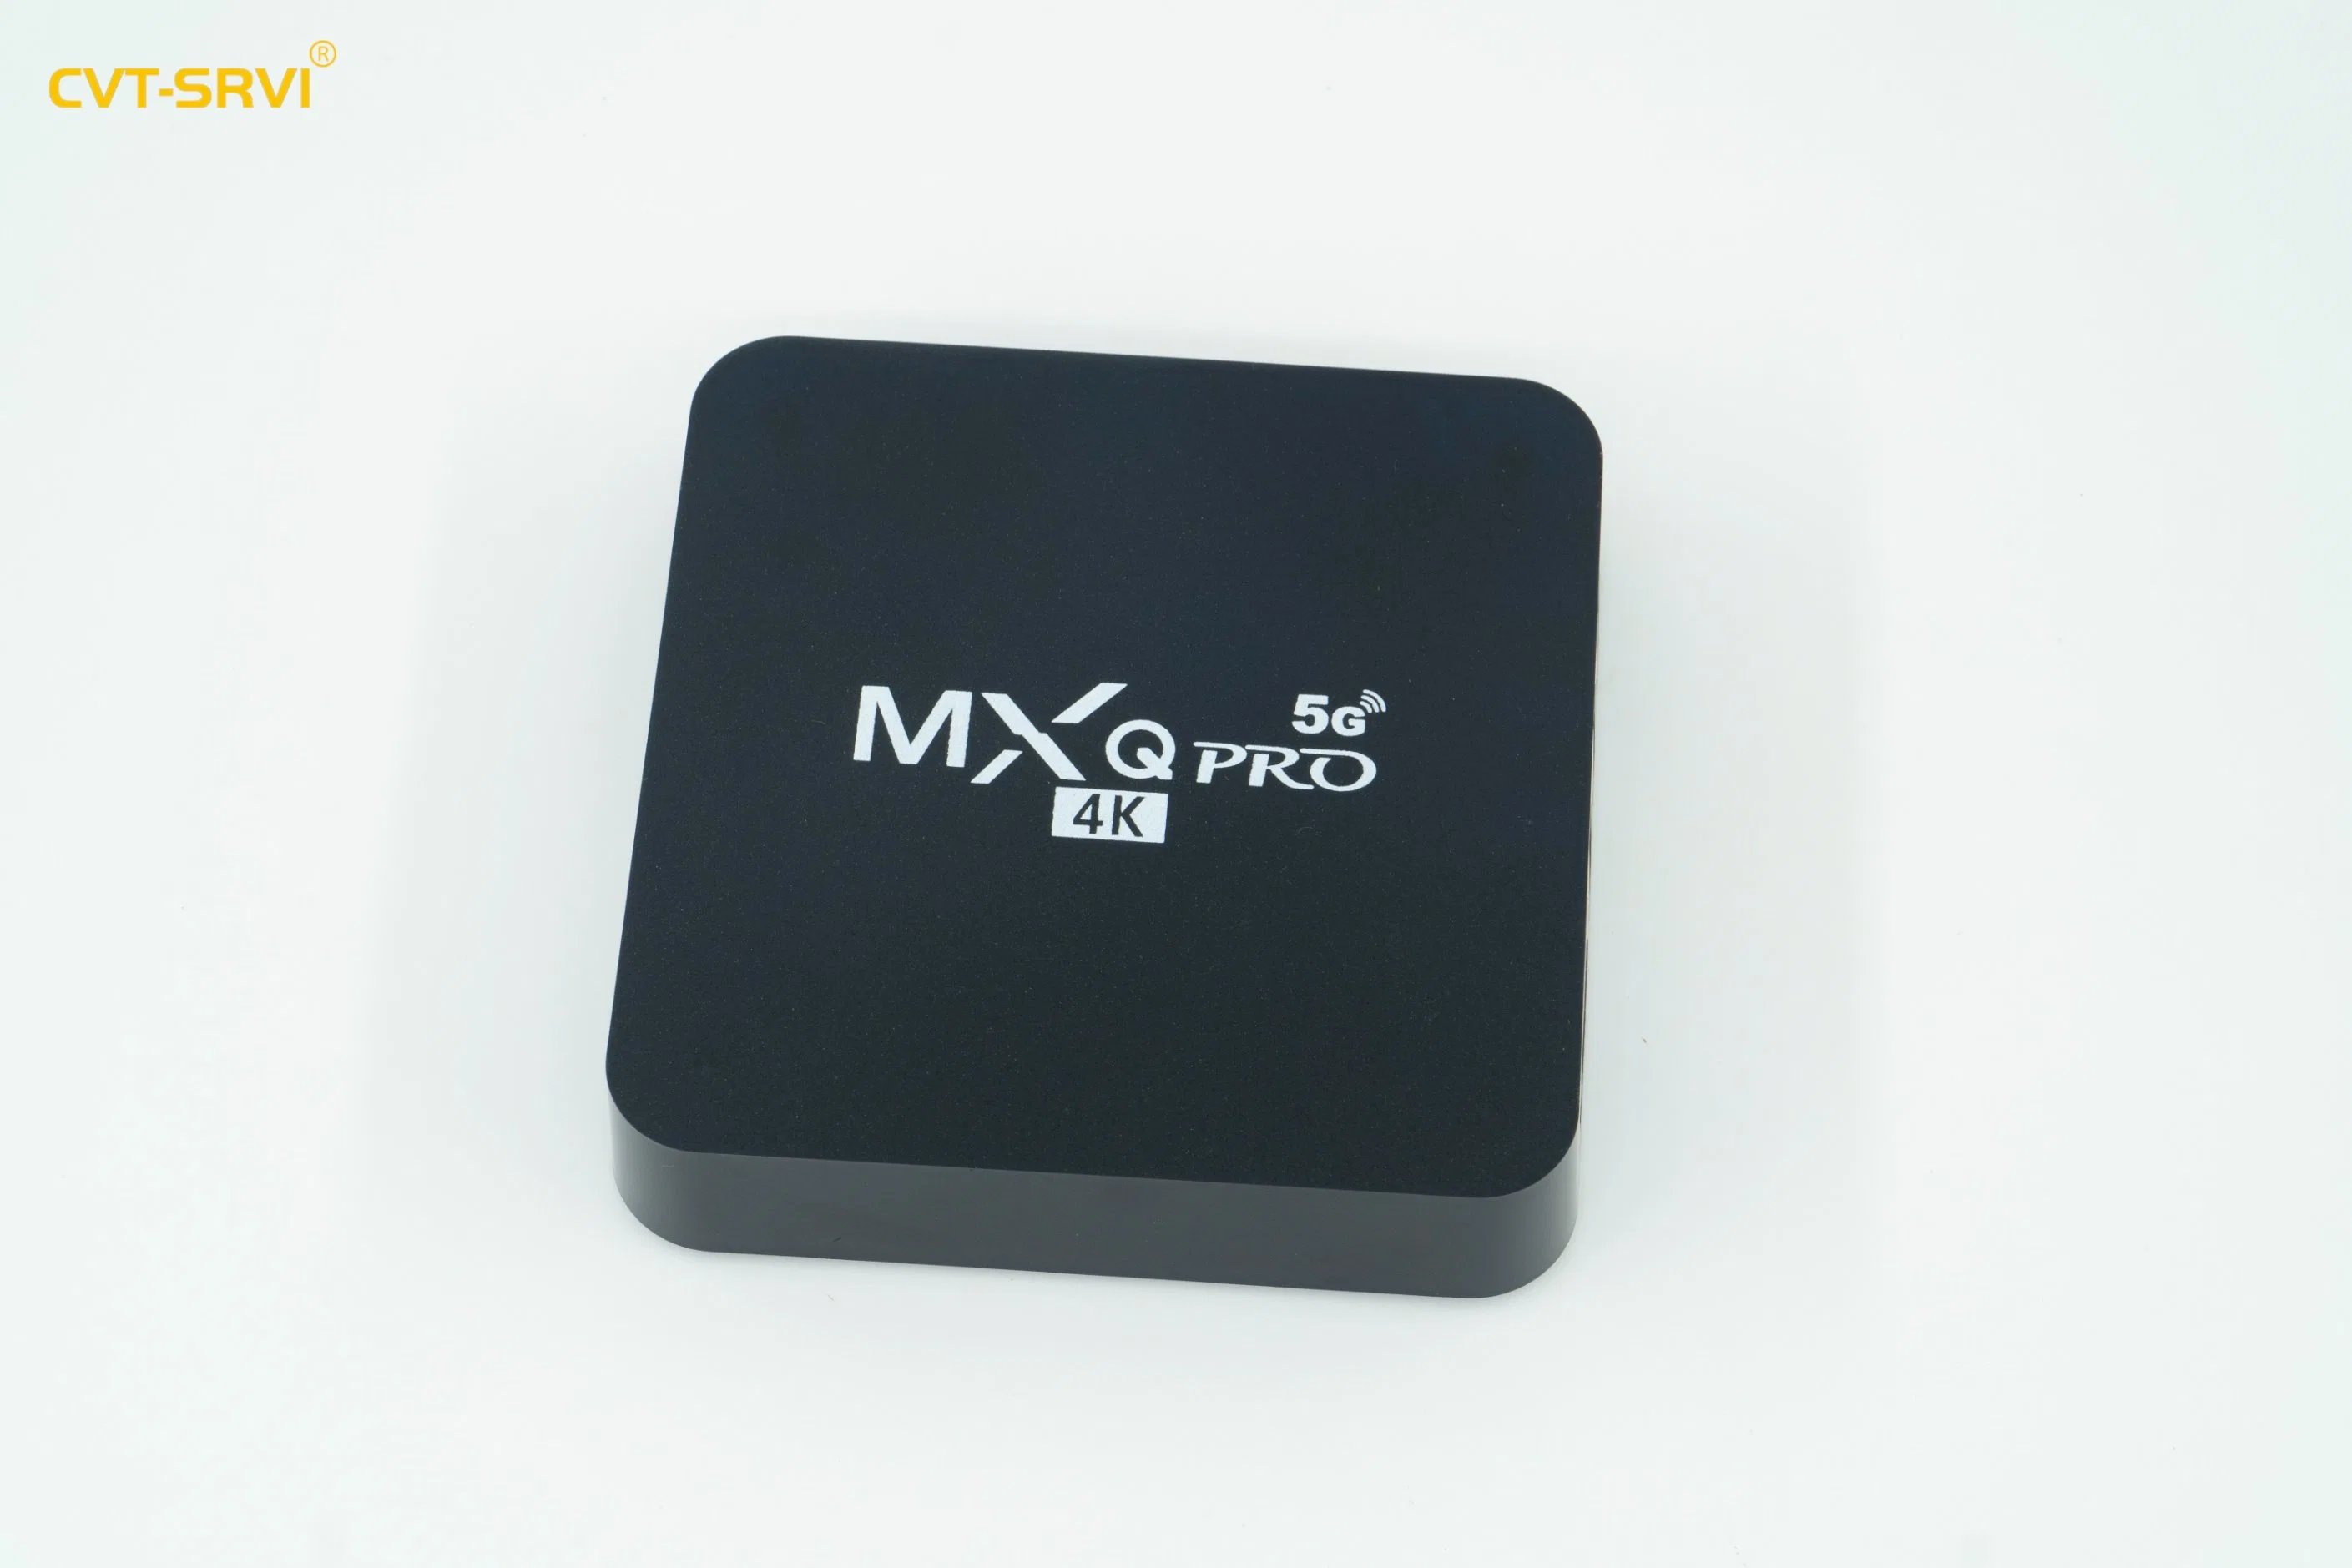 Горячая продажа 4K Mxq PRO 5g телевизор в салоне 1/2/4 ГБ ОЗУ 8/16Gb ROM Mxq PRO 5g телевизор в салоне Mxq PRO 4K Android телевизор .